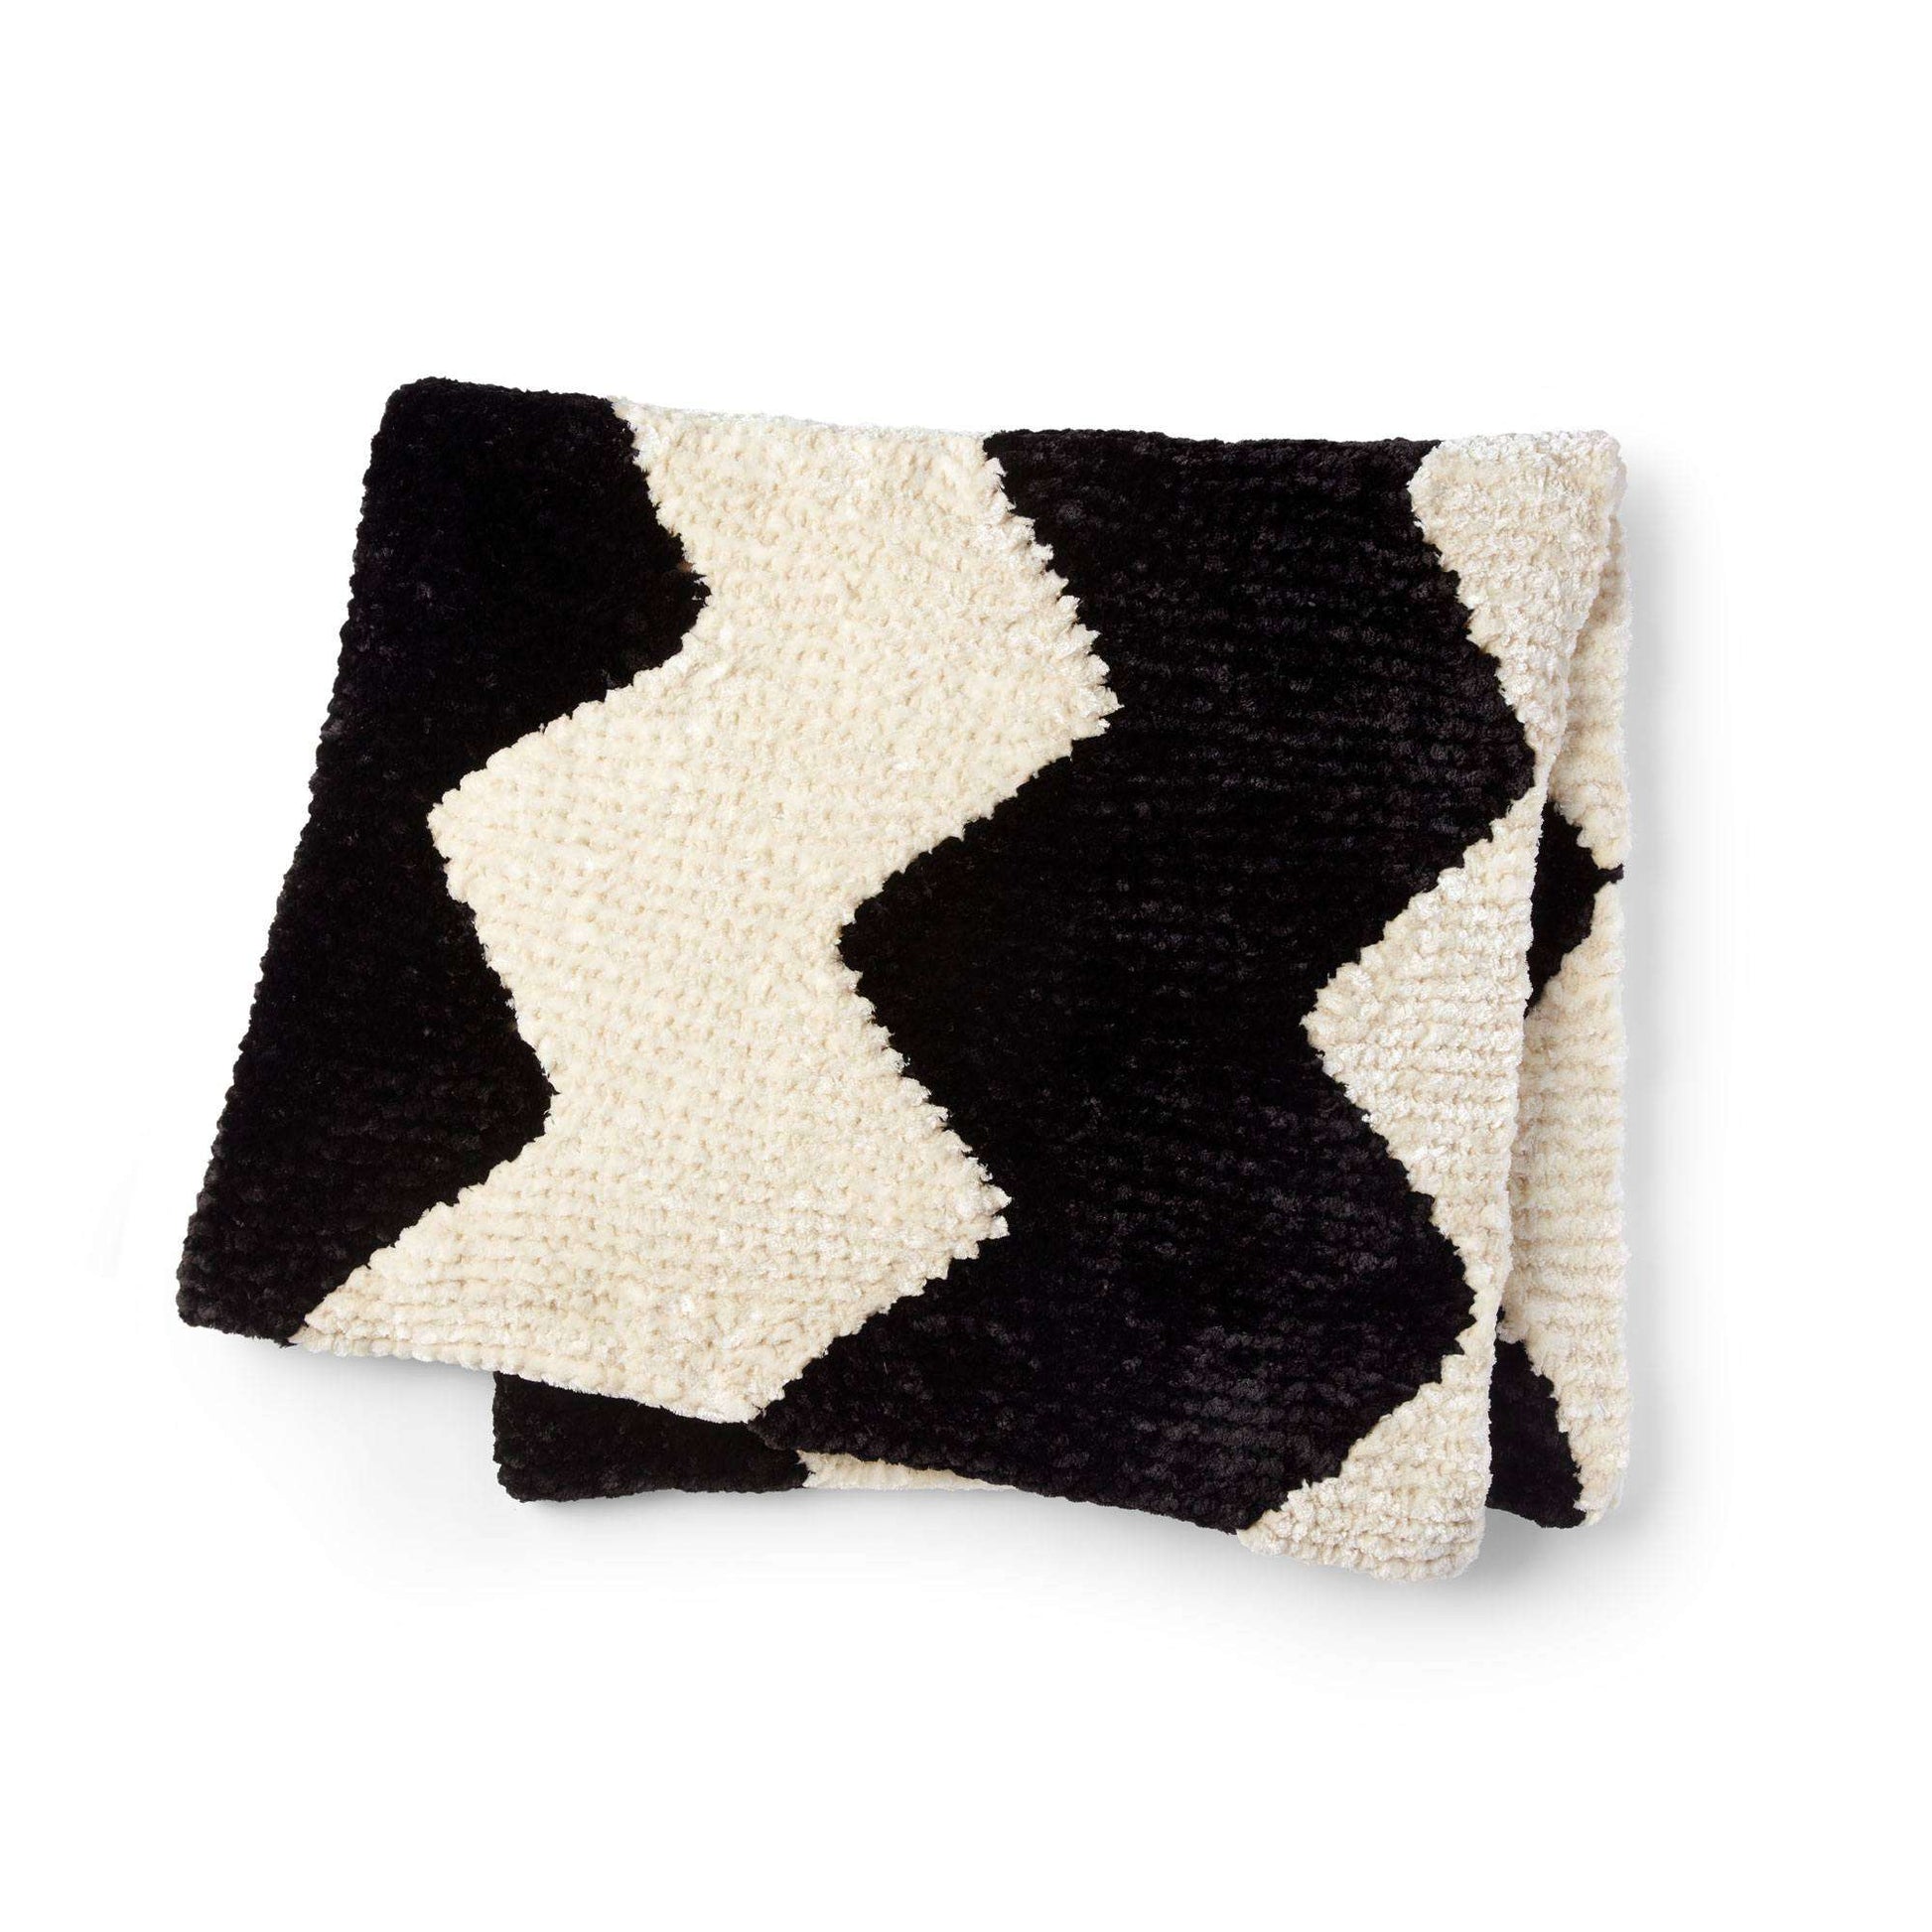 Free Bernat Chevron Inspired Knit Blanket Pattern